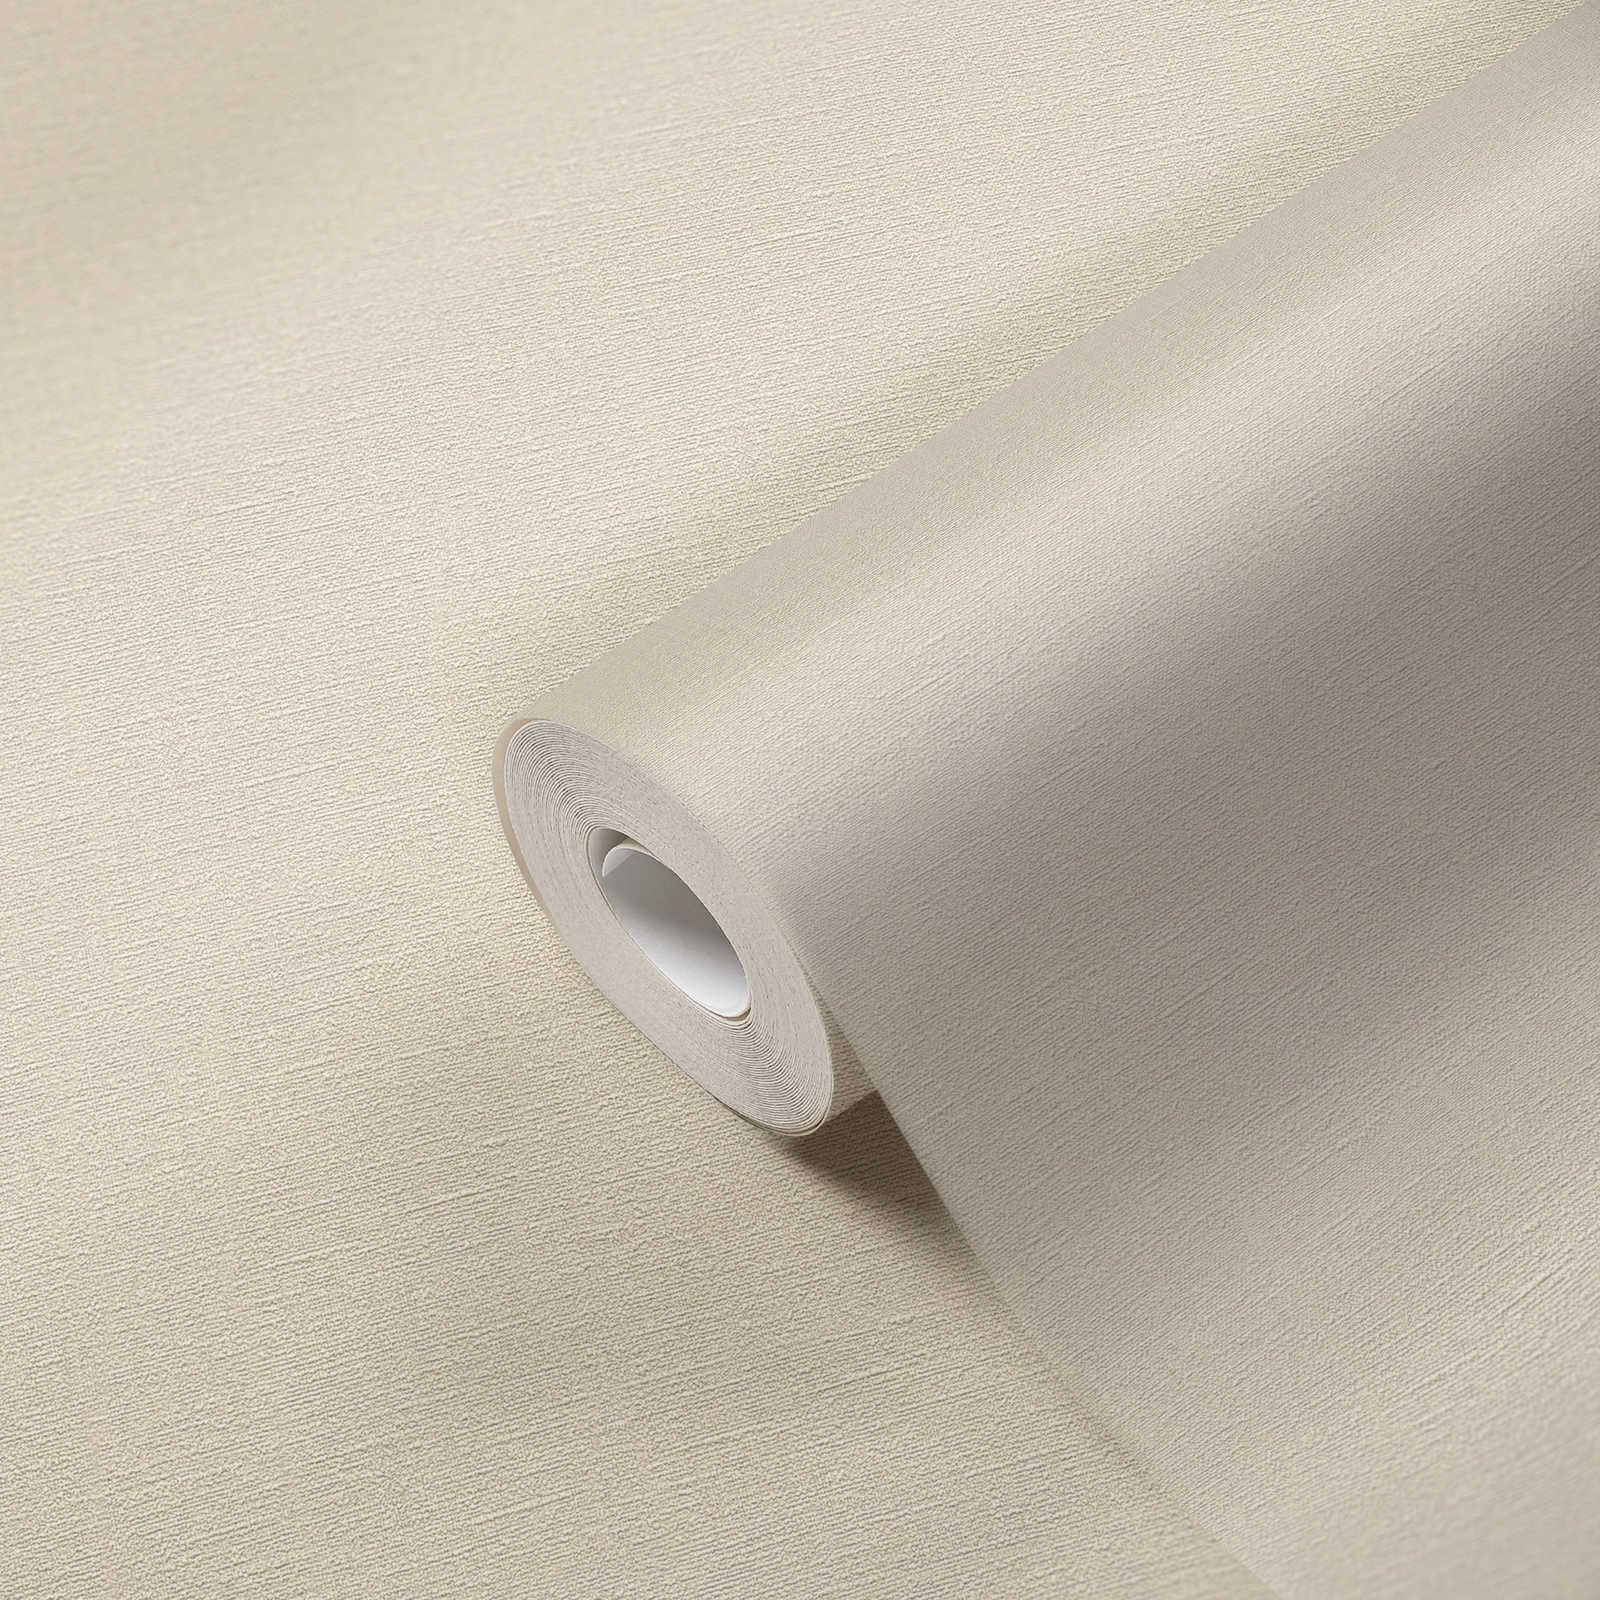             Beige wallpaper plain & matte with textured pattern
        